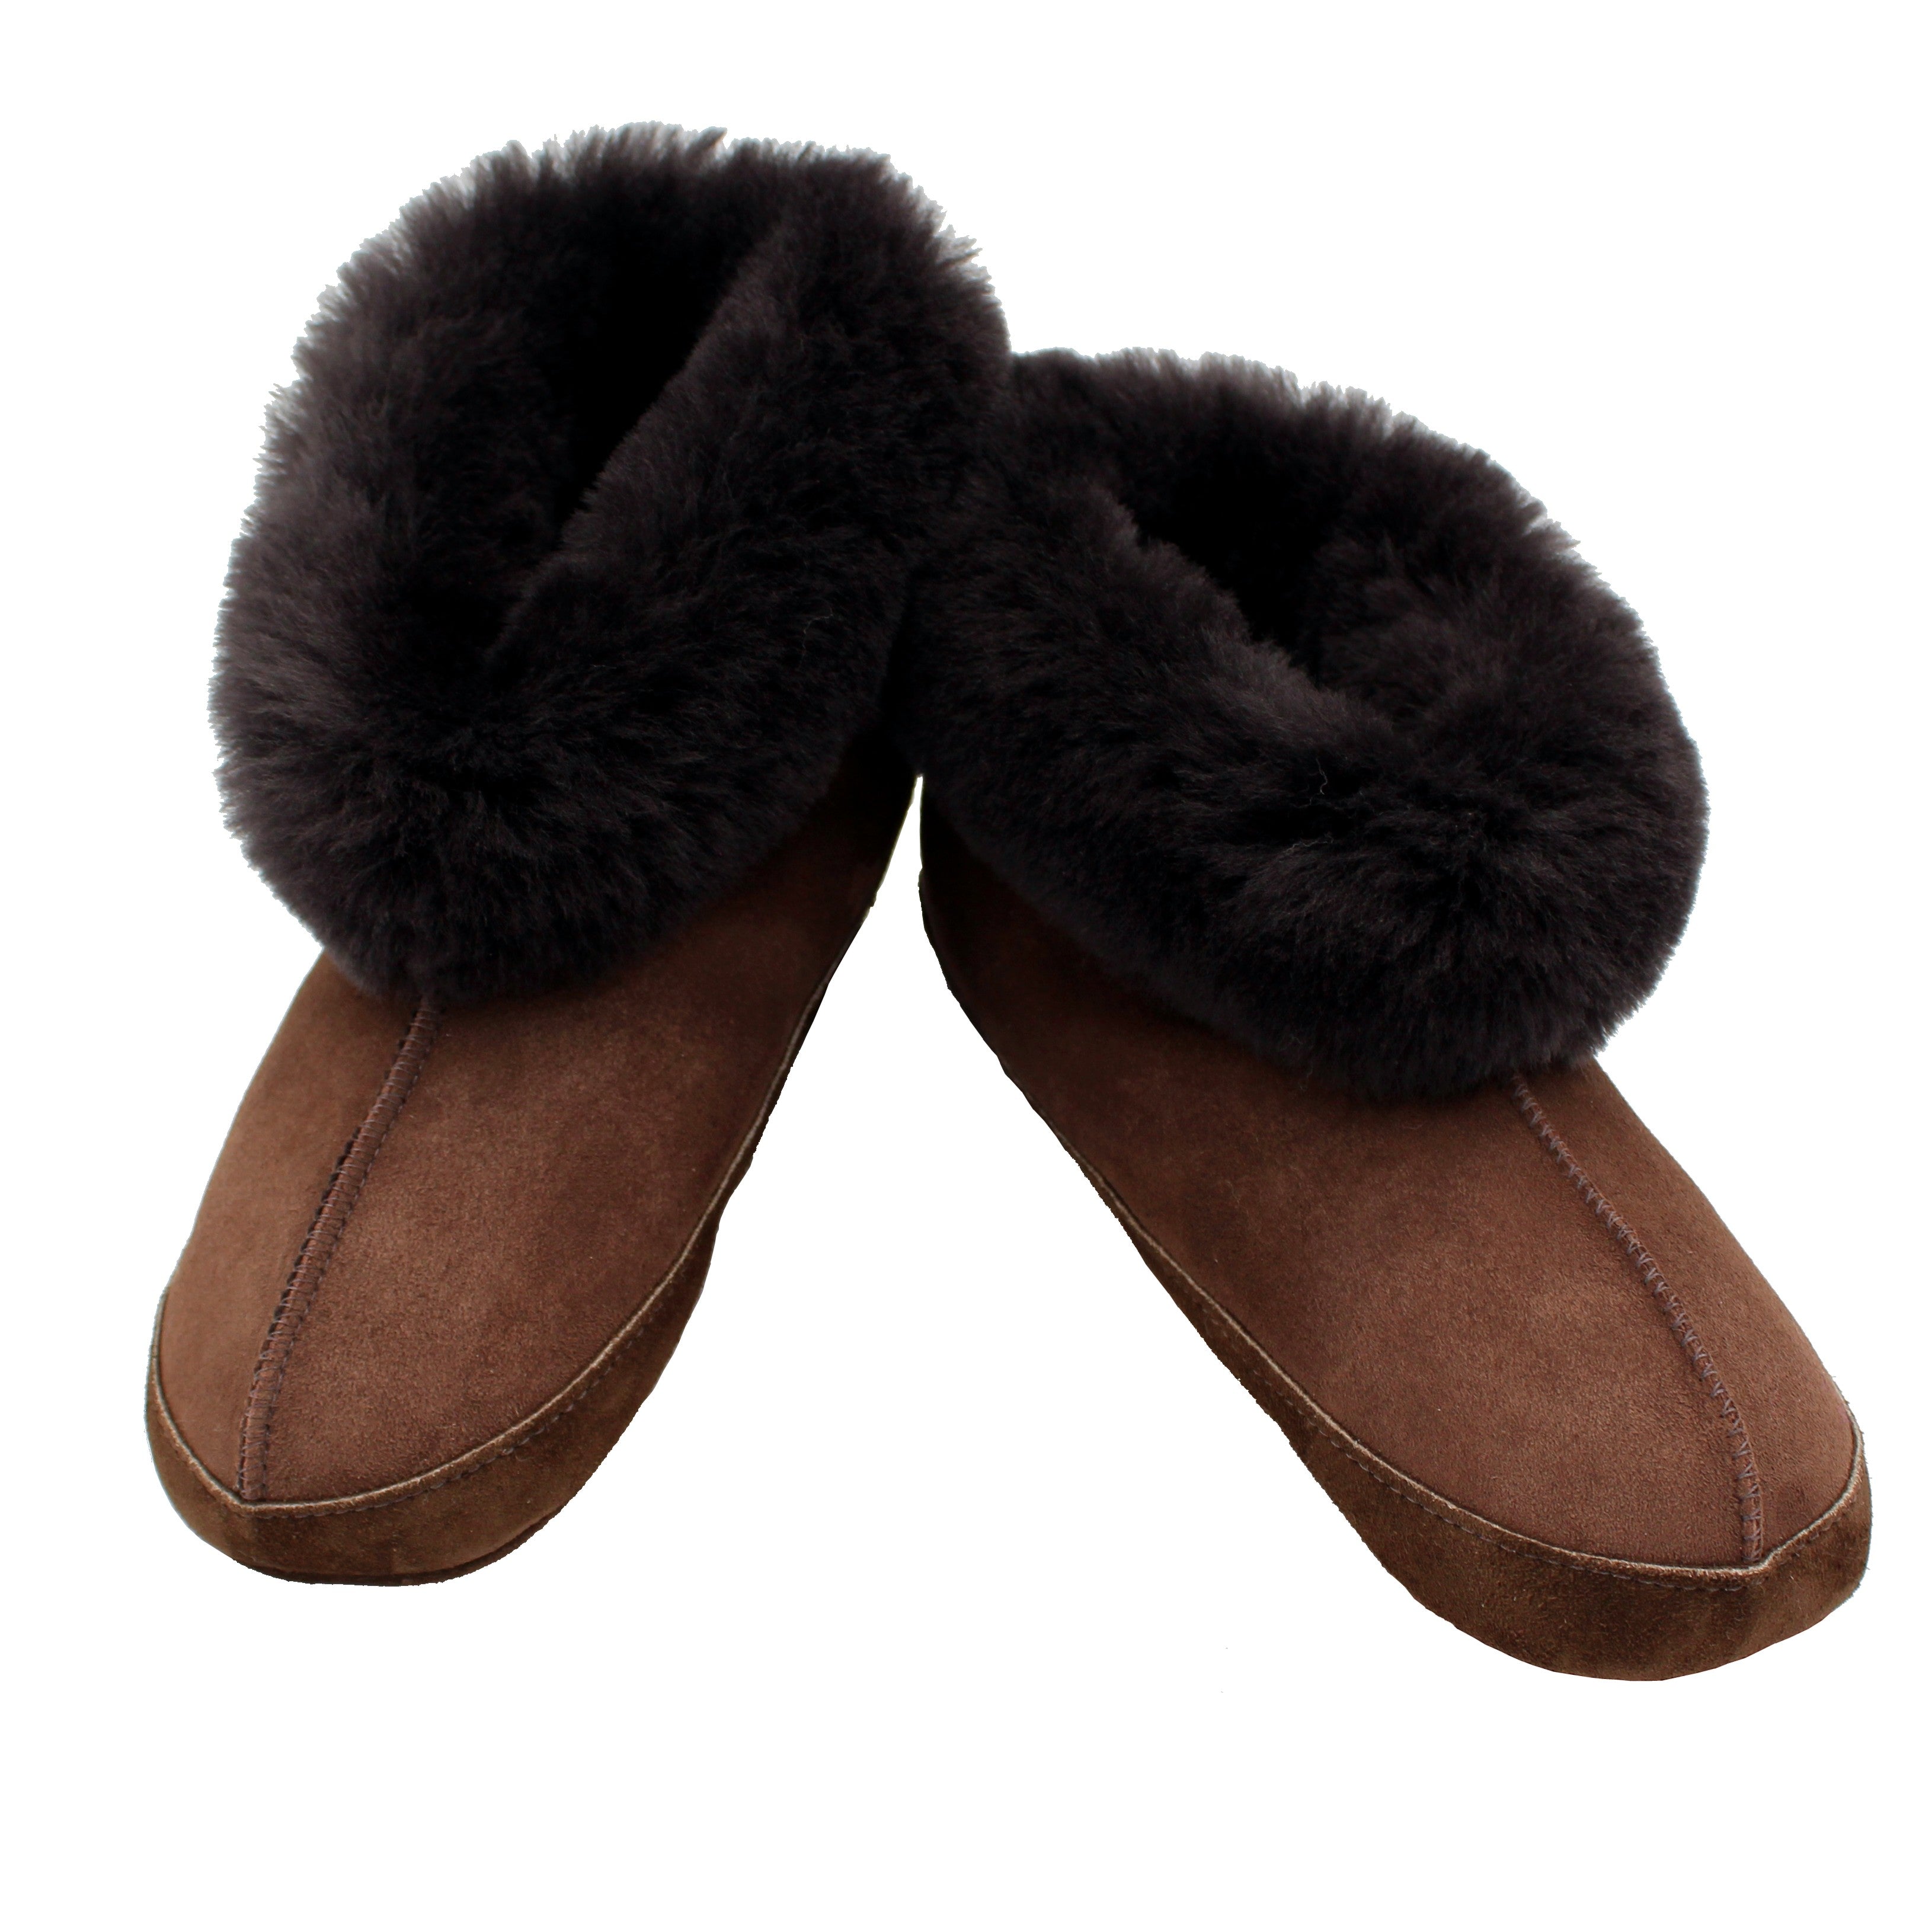 cattivo umore multiplo posta sheepskin lined slippers precedente  Esattamente disconnesso